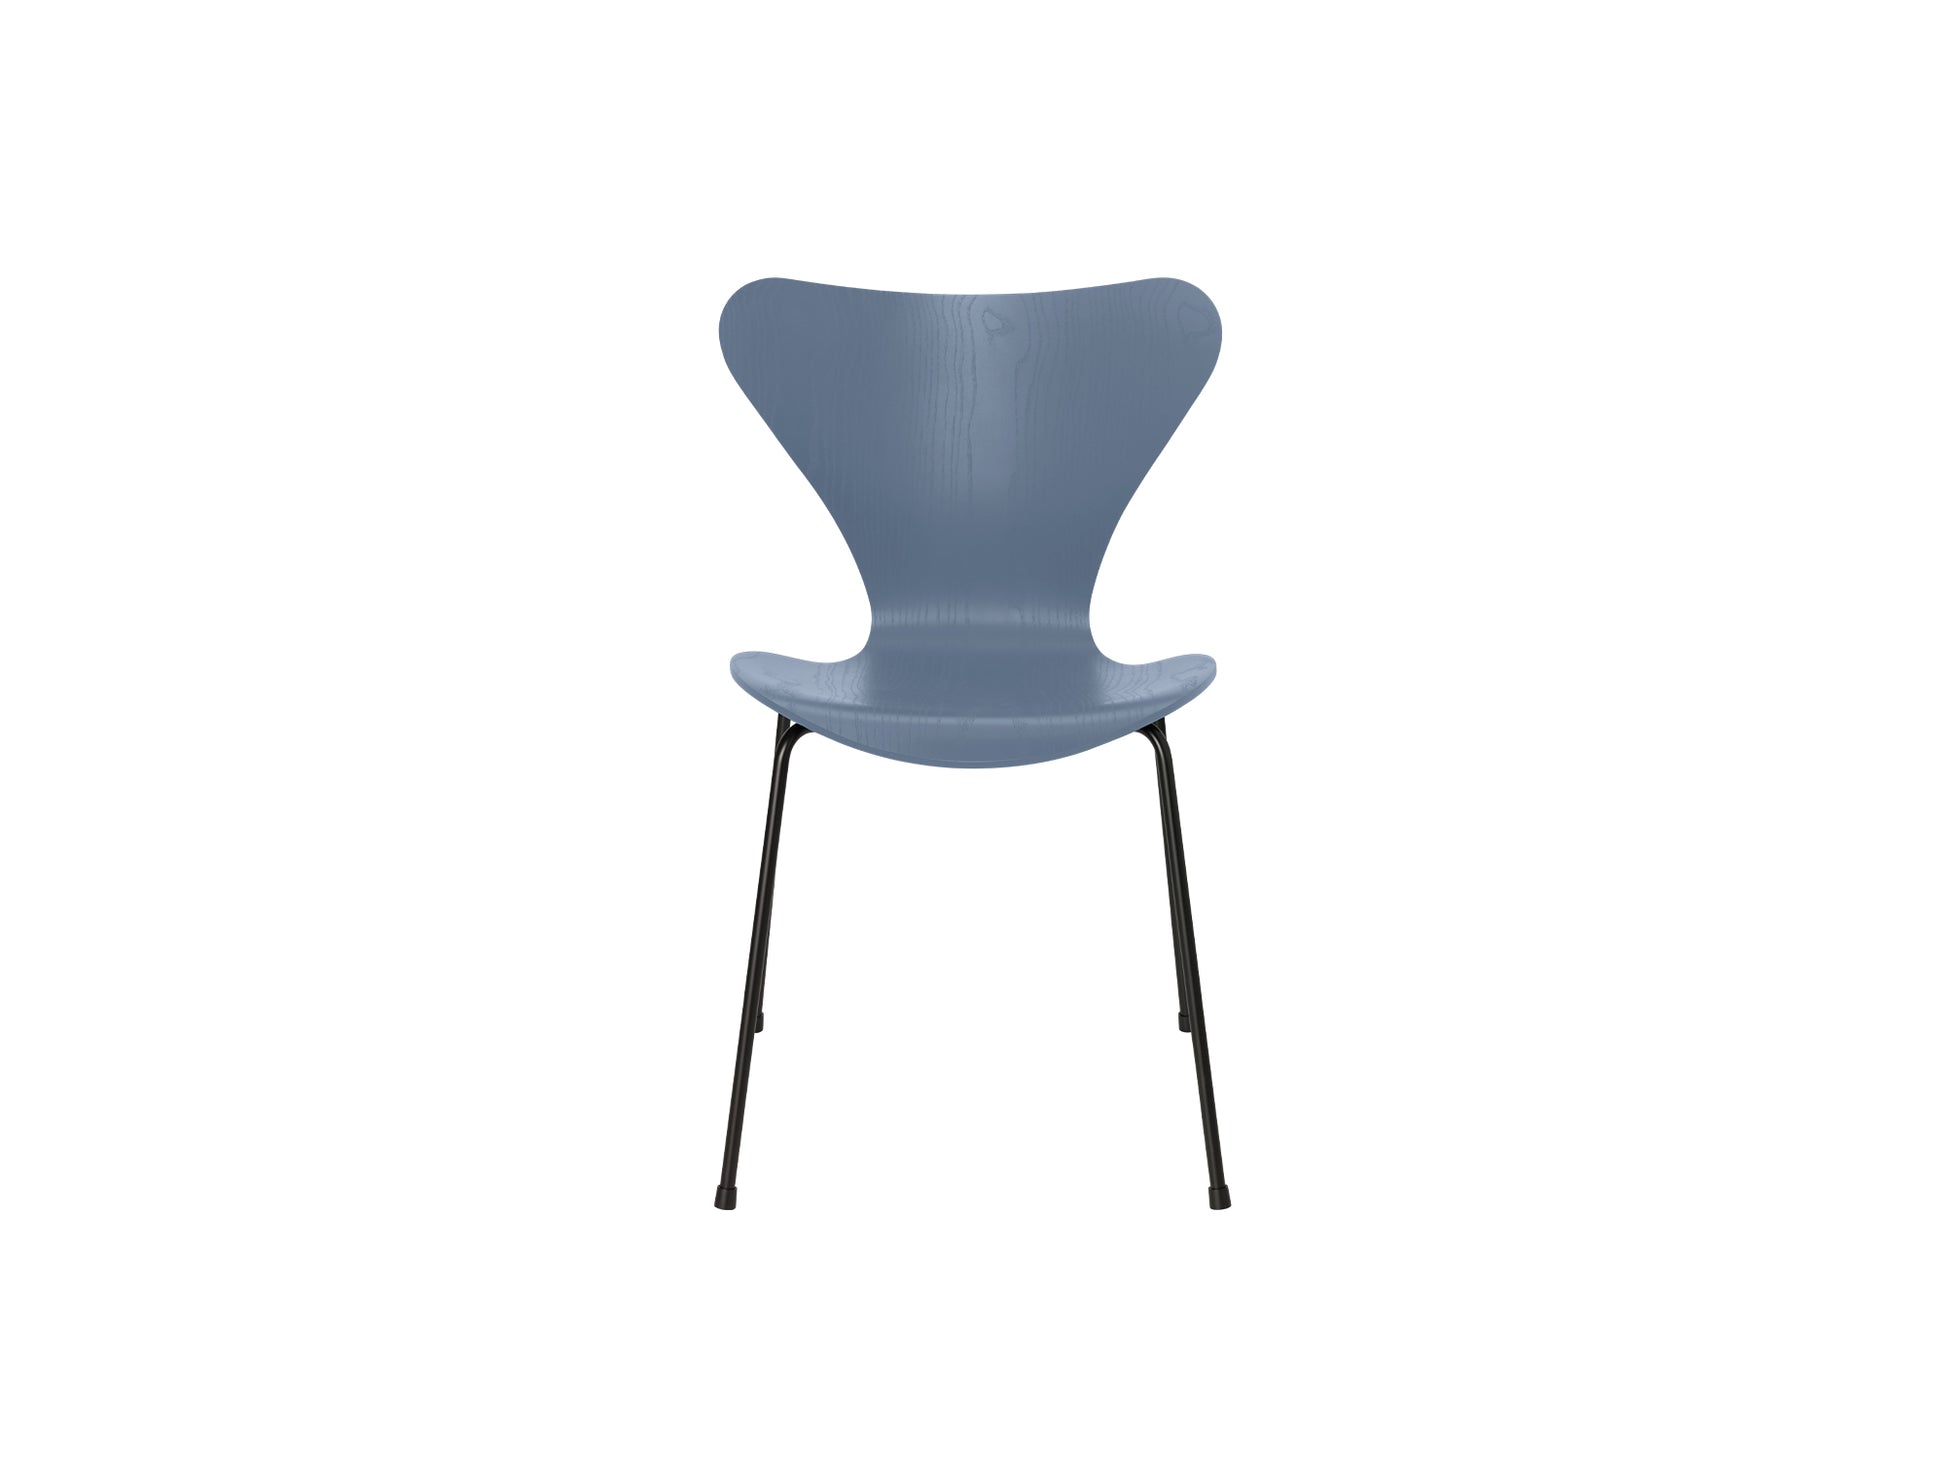 Series 7™ 3107 Dining Chair by Fritz Hansen - Dusk Blue Coloured Ash Veneer Shell / Black Steel